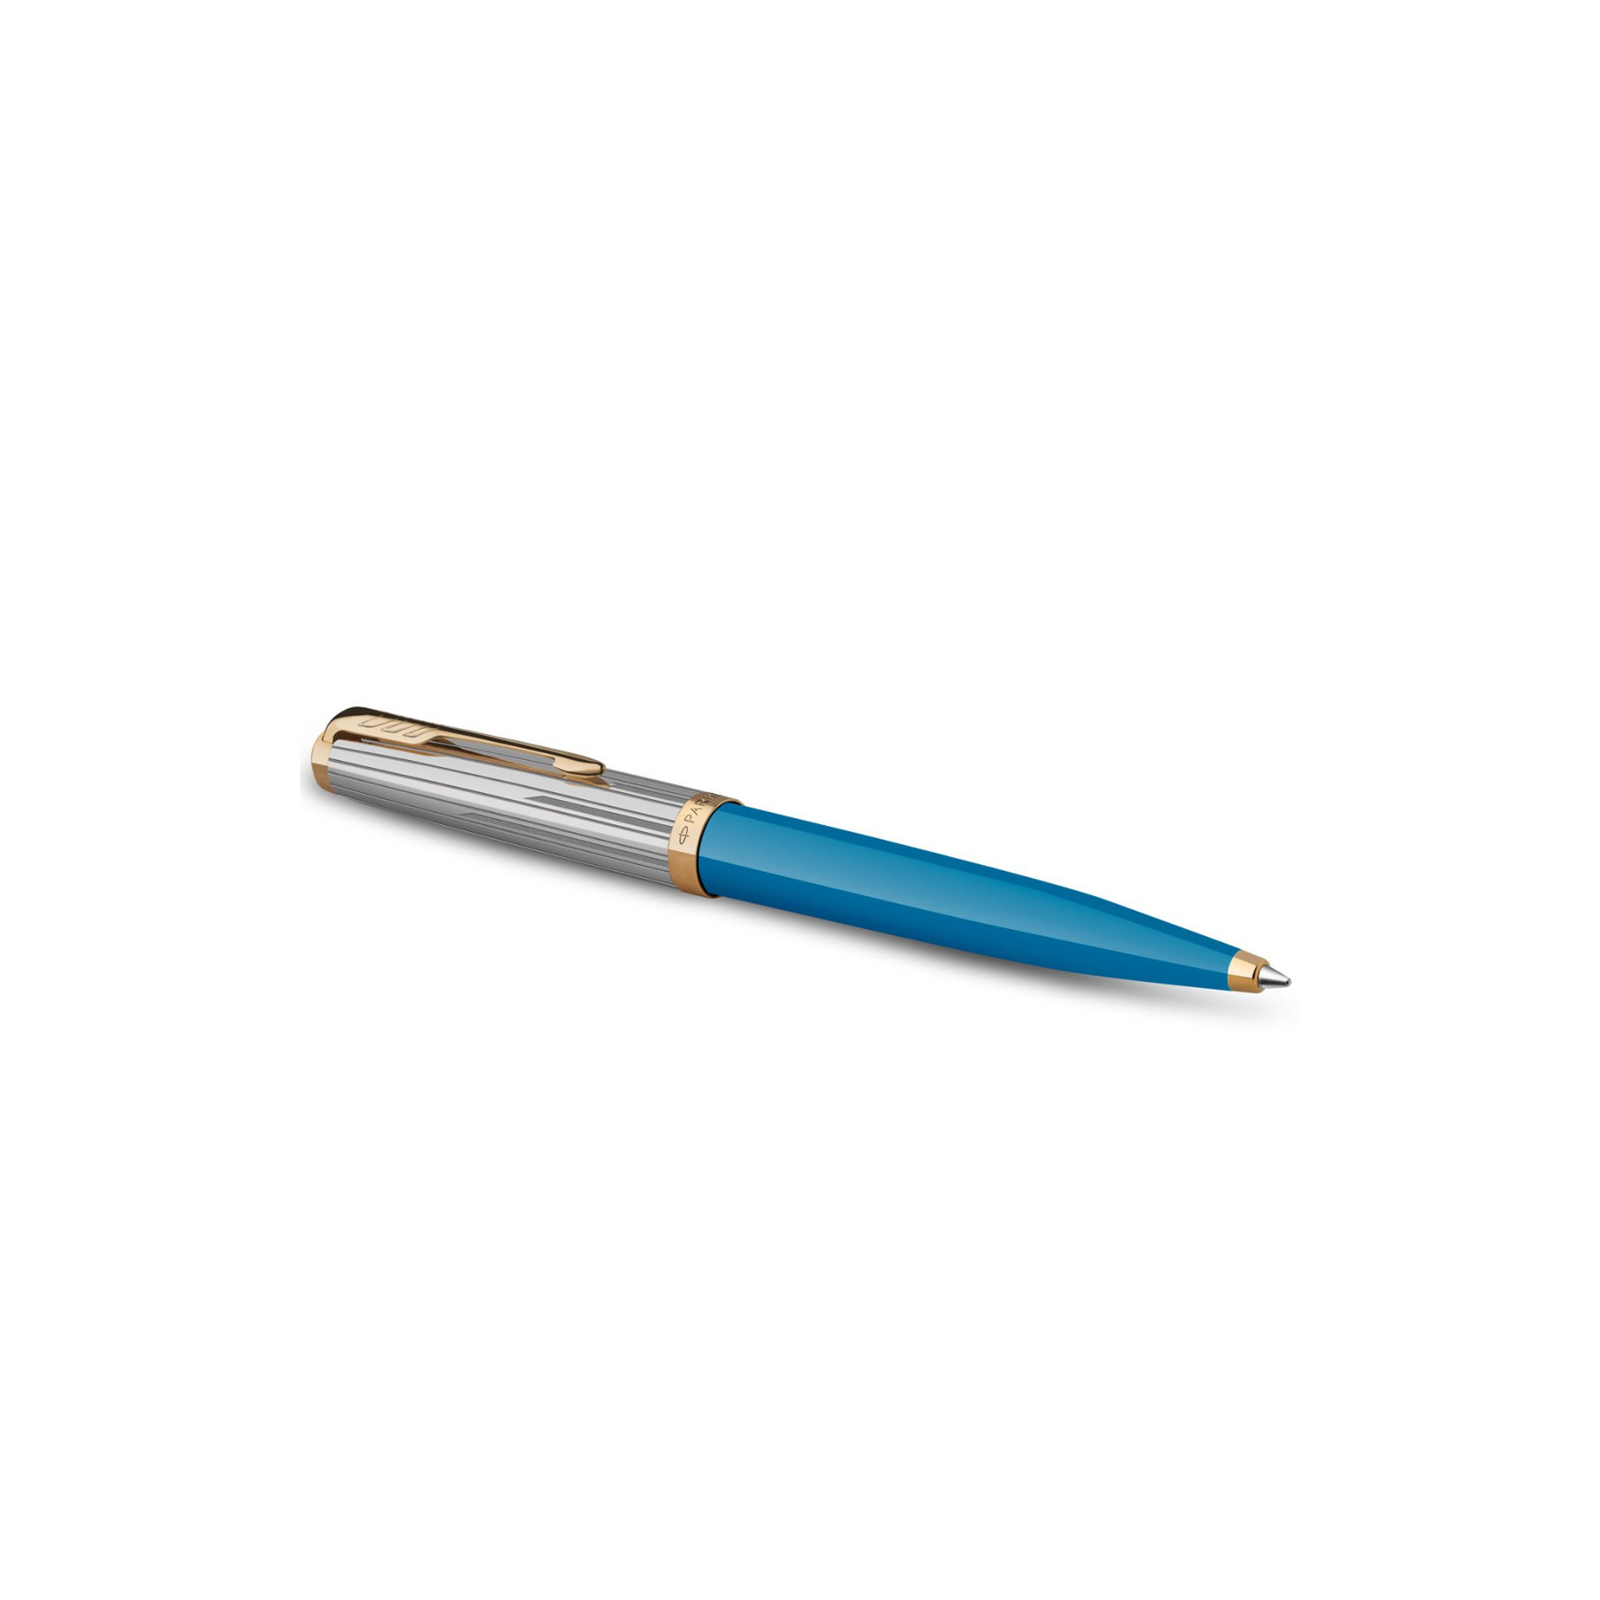 Ручка кулькова Parker 51 Premium Turquoise GT BP (56 432) зображення 2